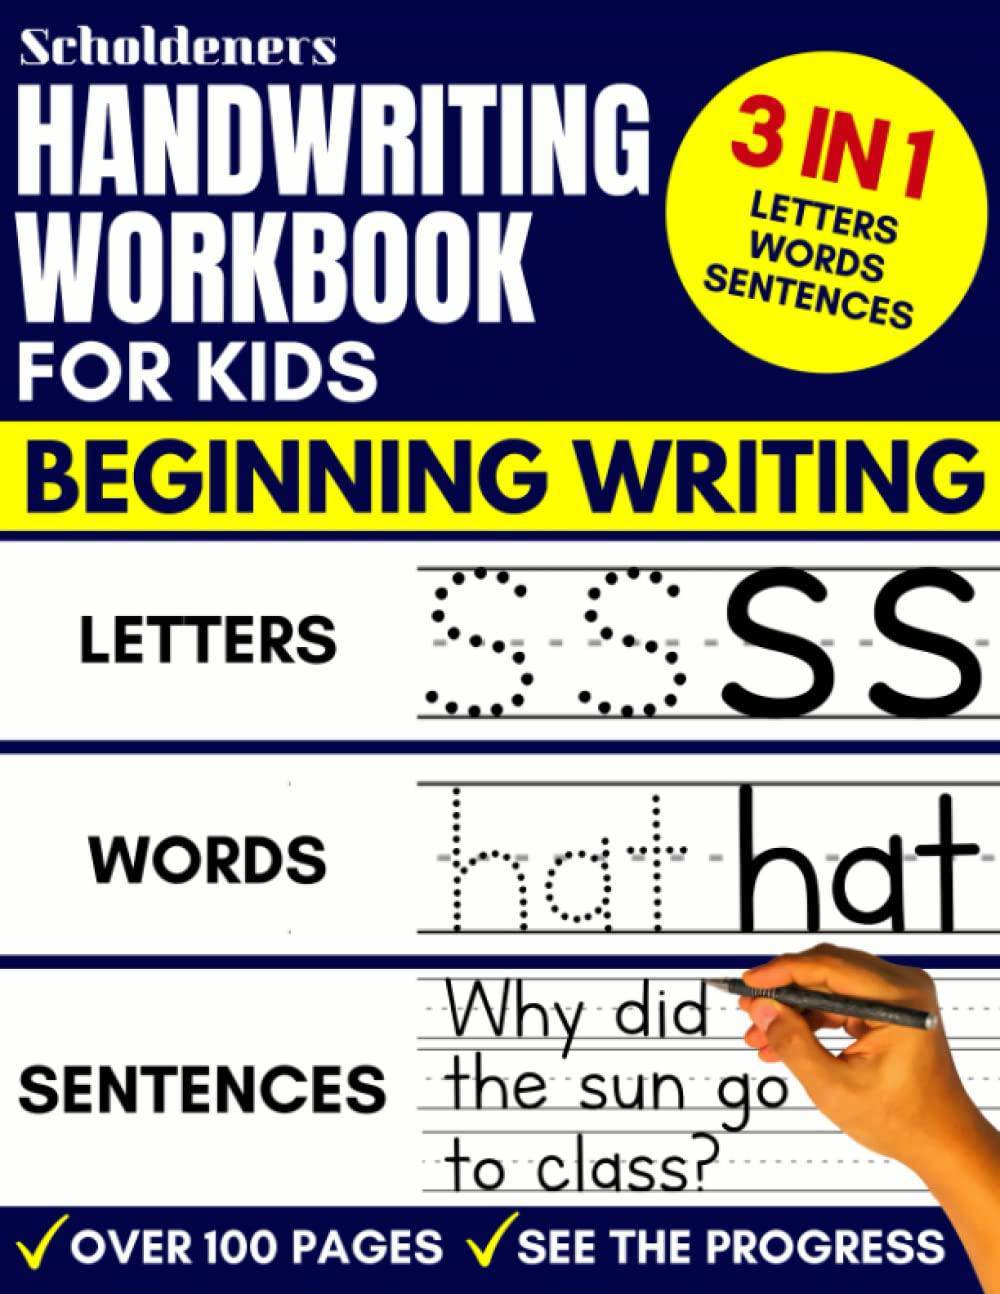 Handwriting Workbook for Kids - SureShot Books Publishing LLC